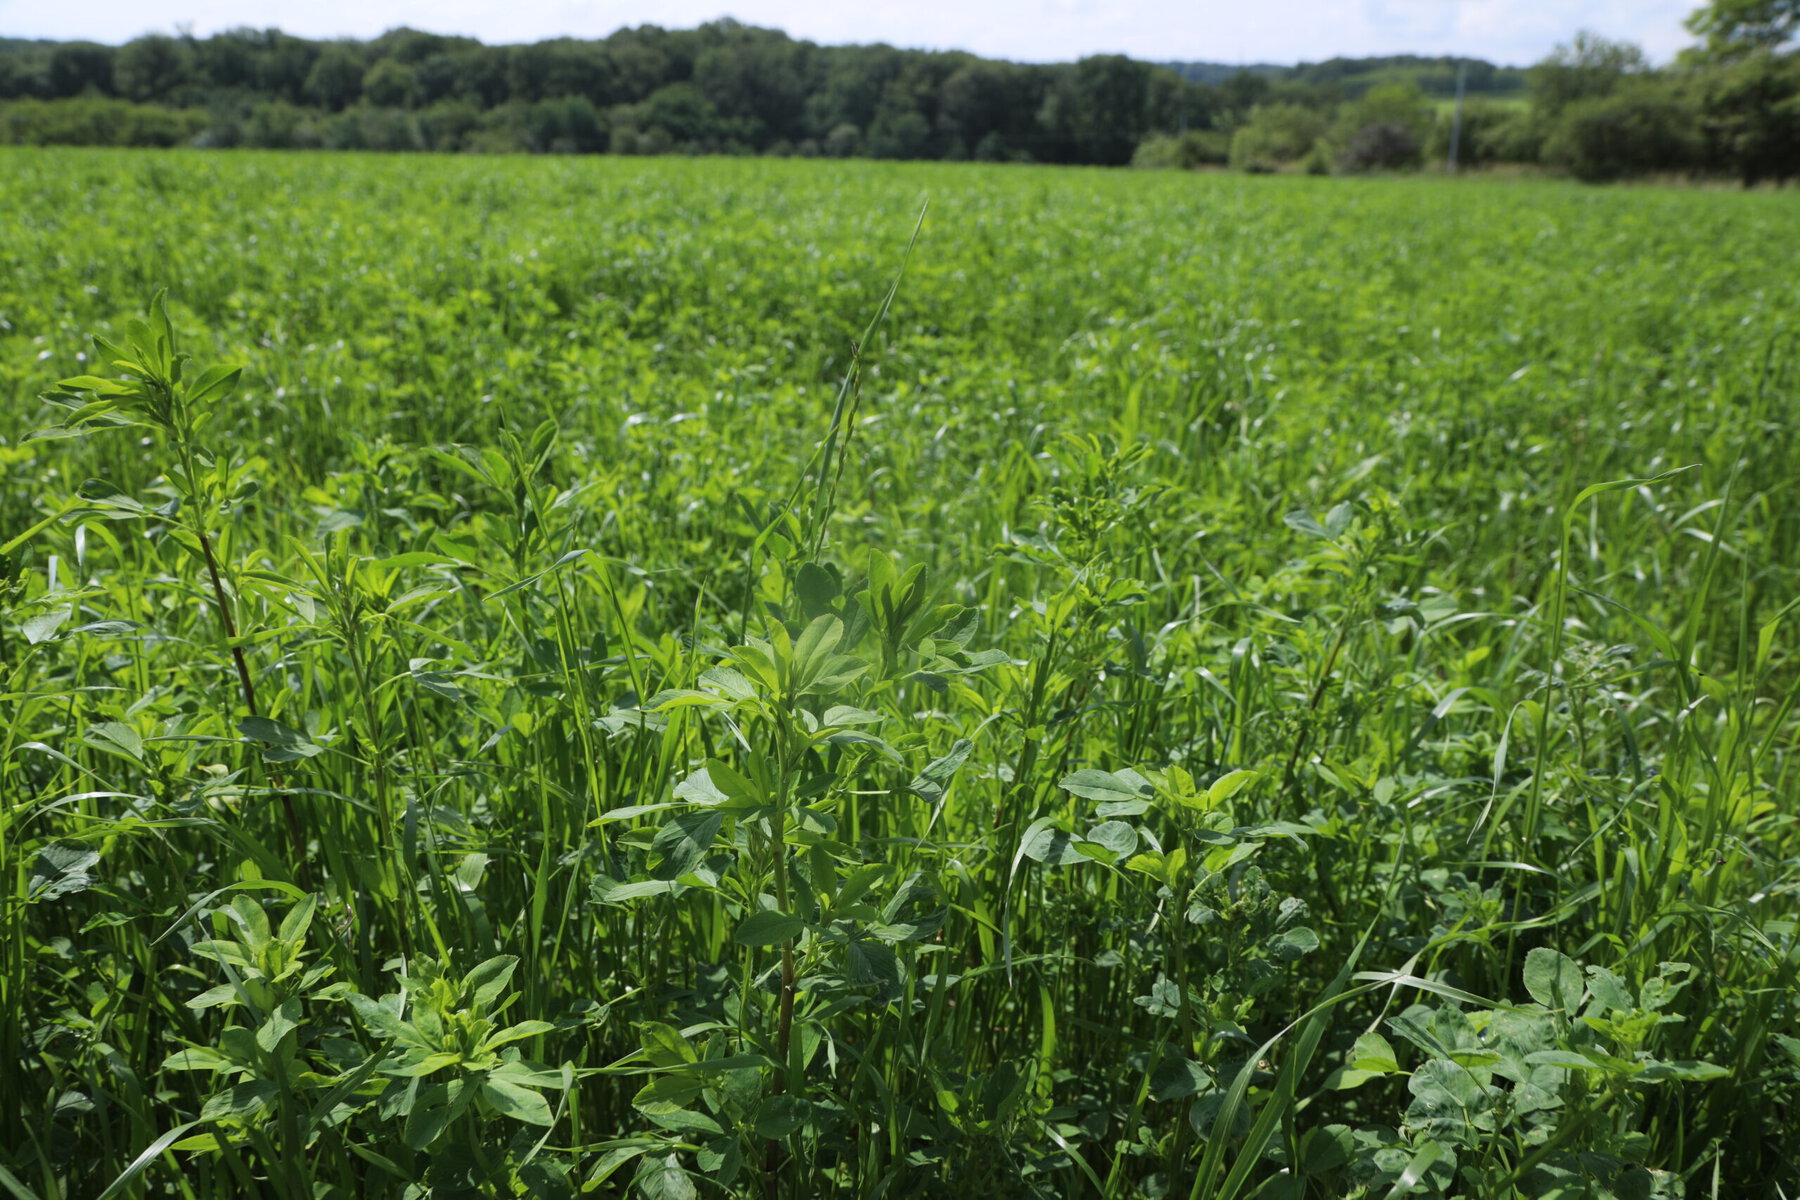 Alfalfa, which helps improve soil fertility, on Jerome Forgeot's farm